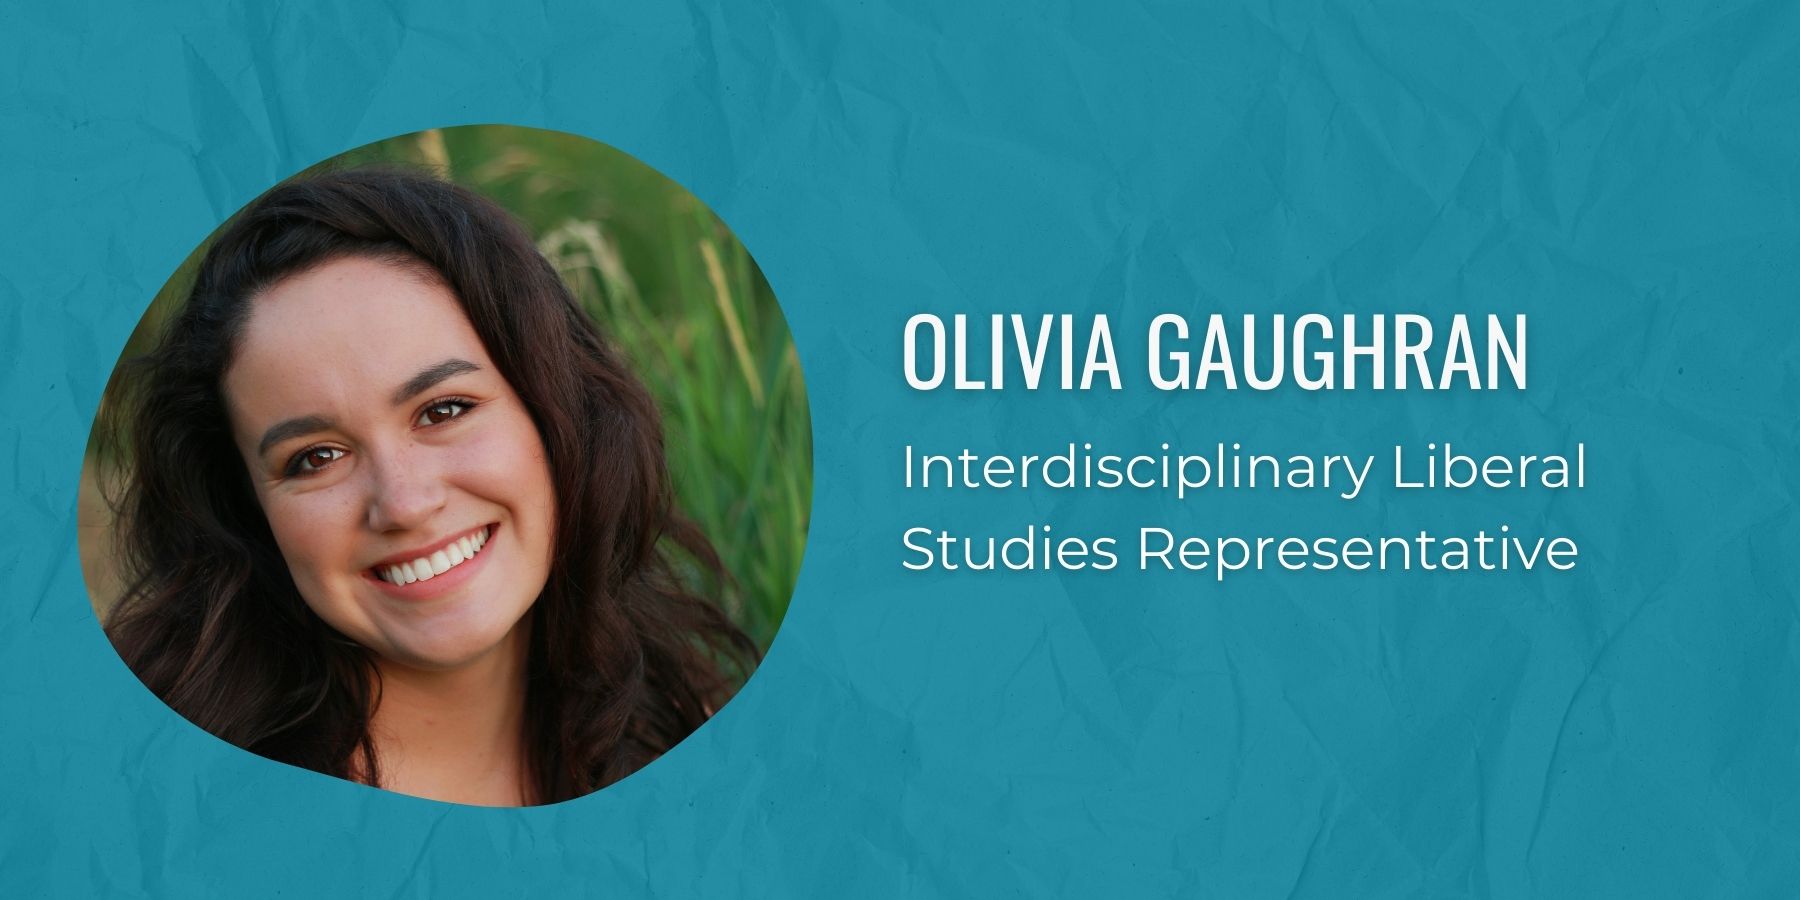 Photo of Olivia Gaughran and text Interdisciplinary Liberal Studies Representative